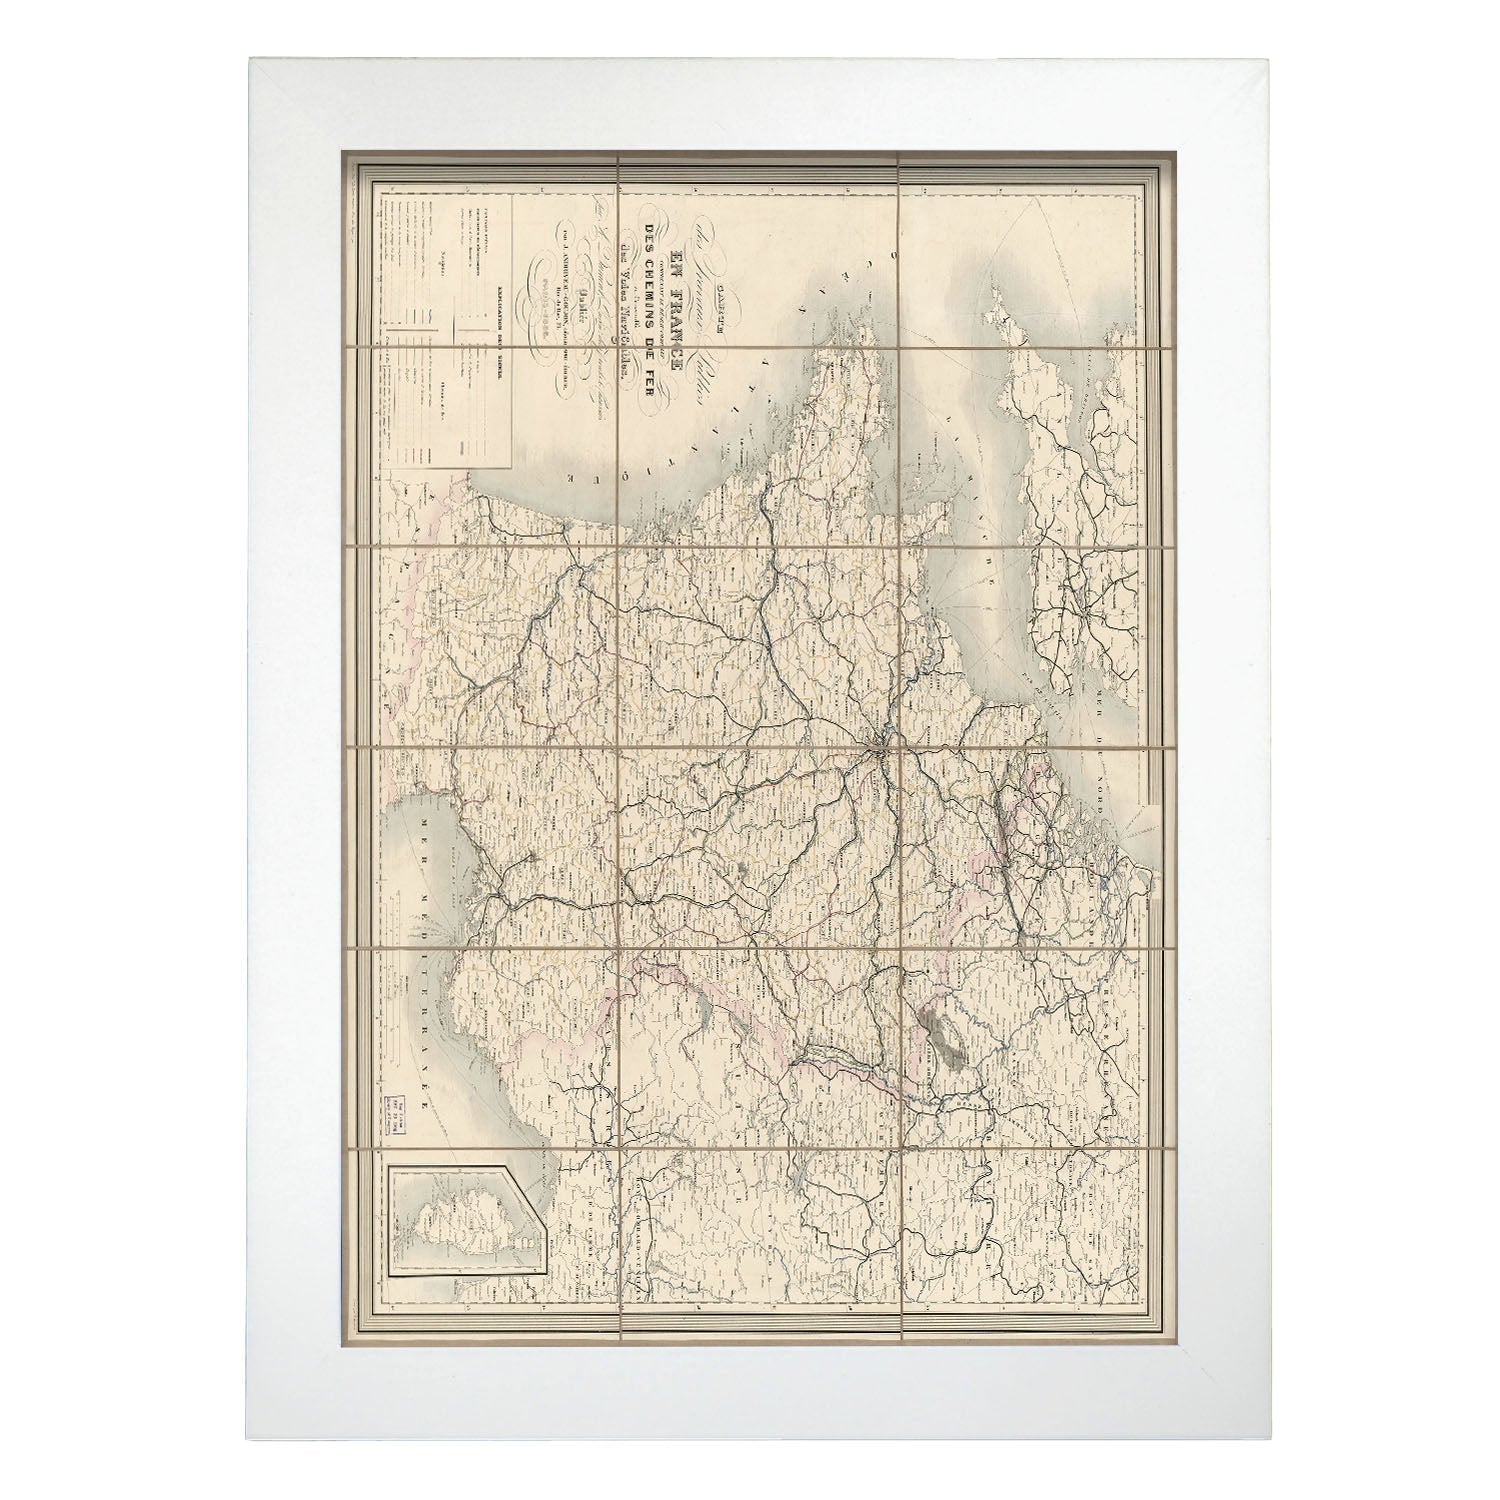 Carte des travaux publics en France 1865-Artwork-Nacnic-A4-Marco Blanco-Nacnic Estudio SL